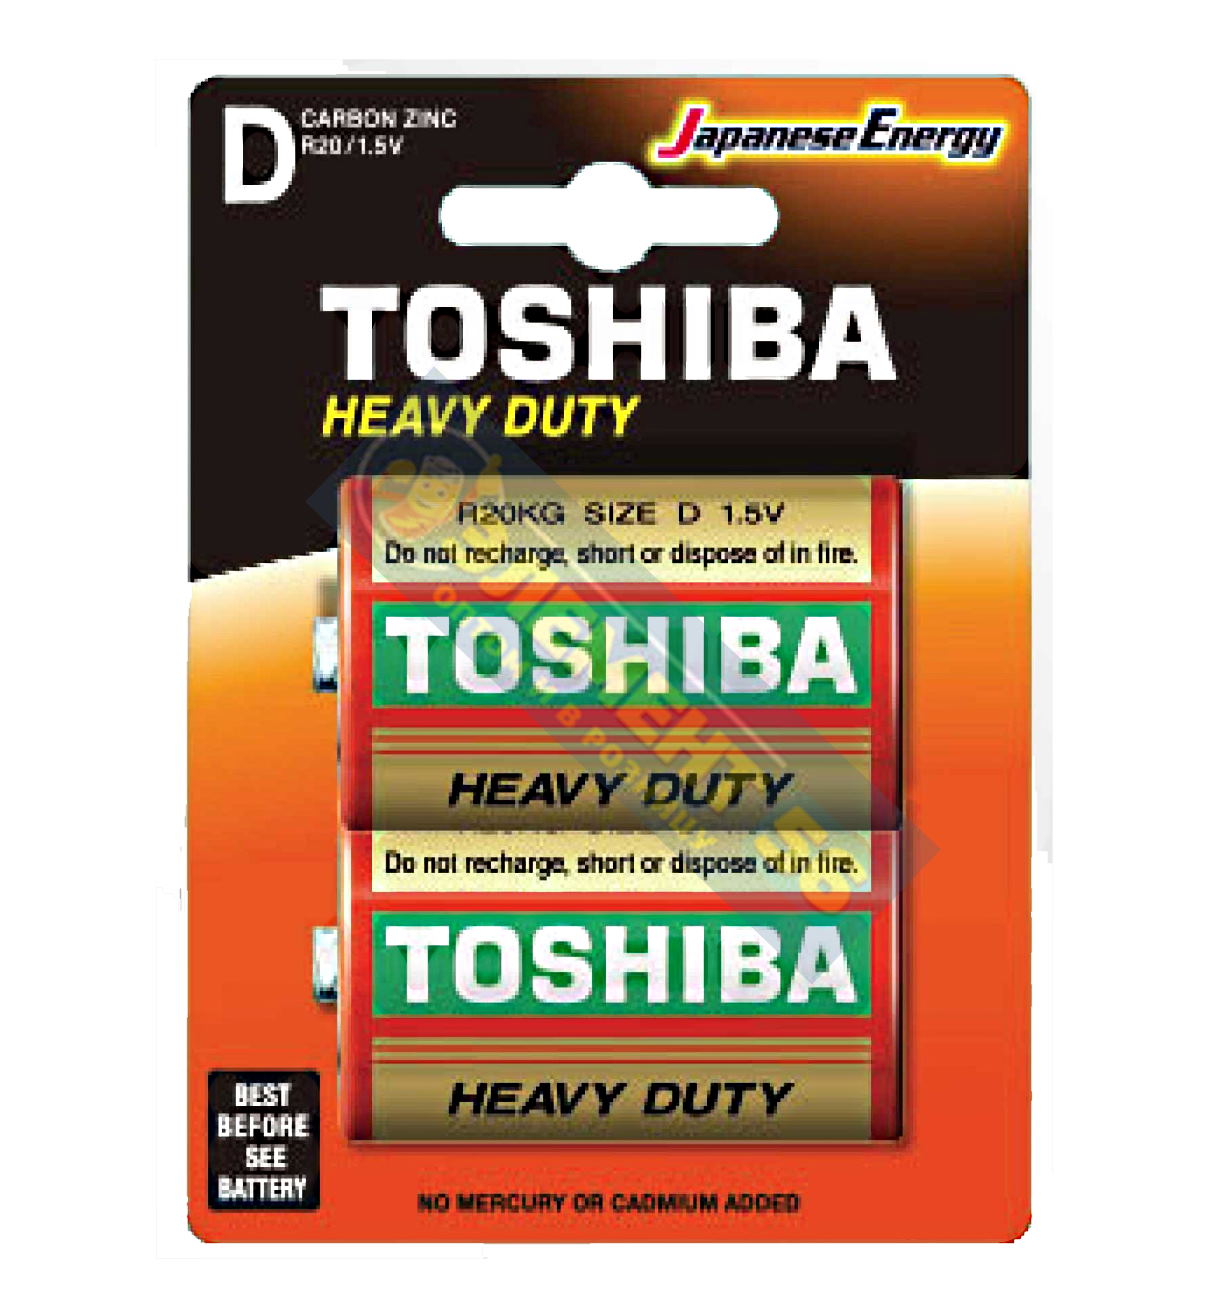 TOSHIBA HEAVY DUTY R20, 373, 13D, D 2BL (2) (24) 25